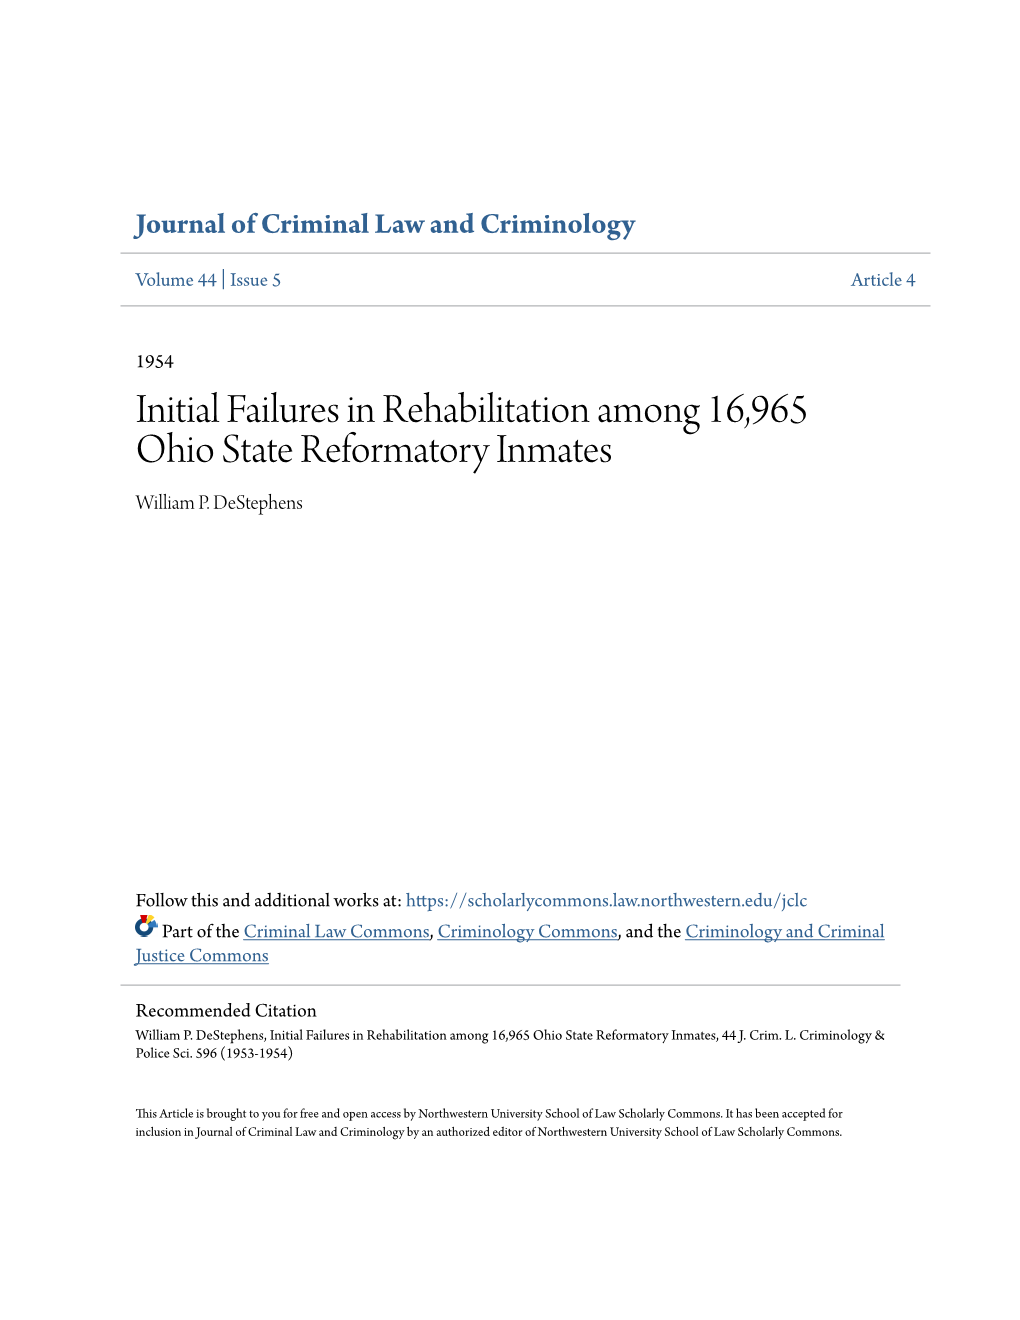 Initial Failures in Rehabilitation Among 16,965 Ohio State Reformatory Inmates William P